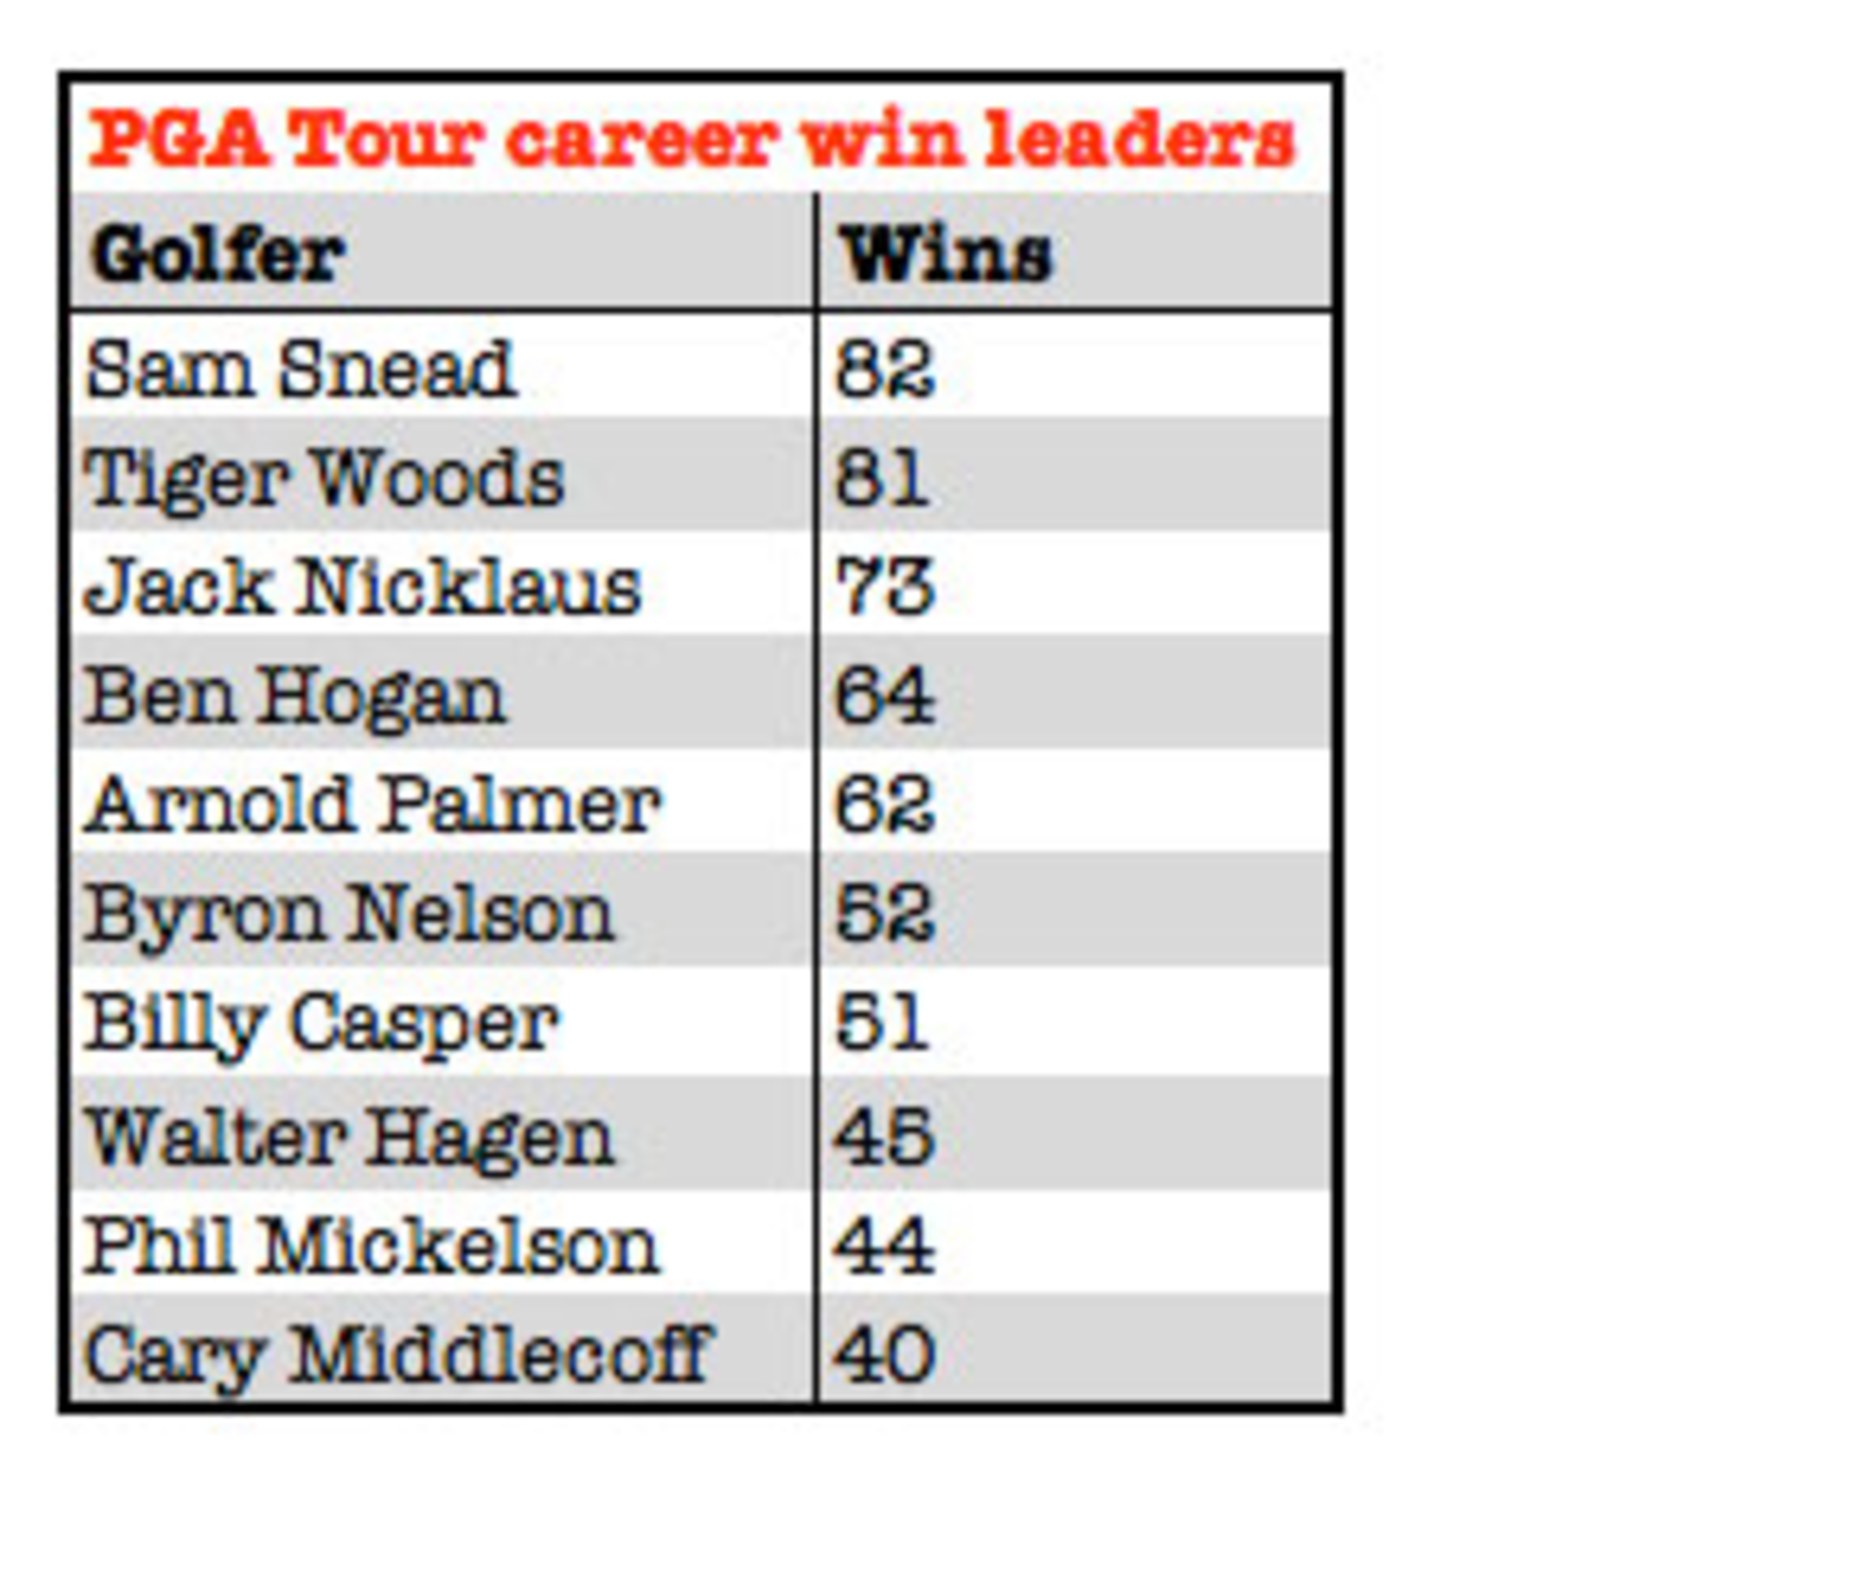 pga tour career earnings rankings